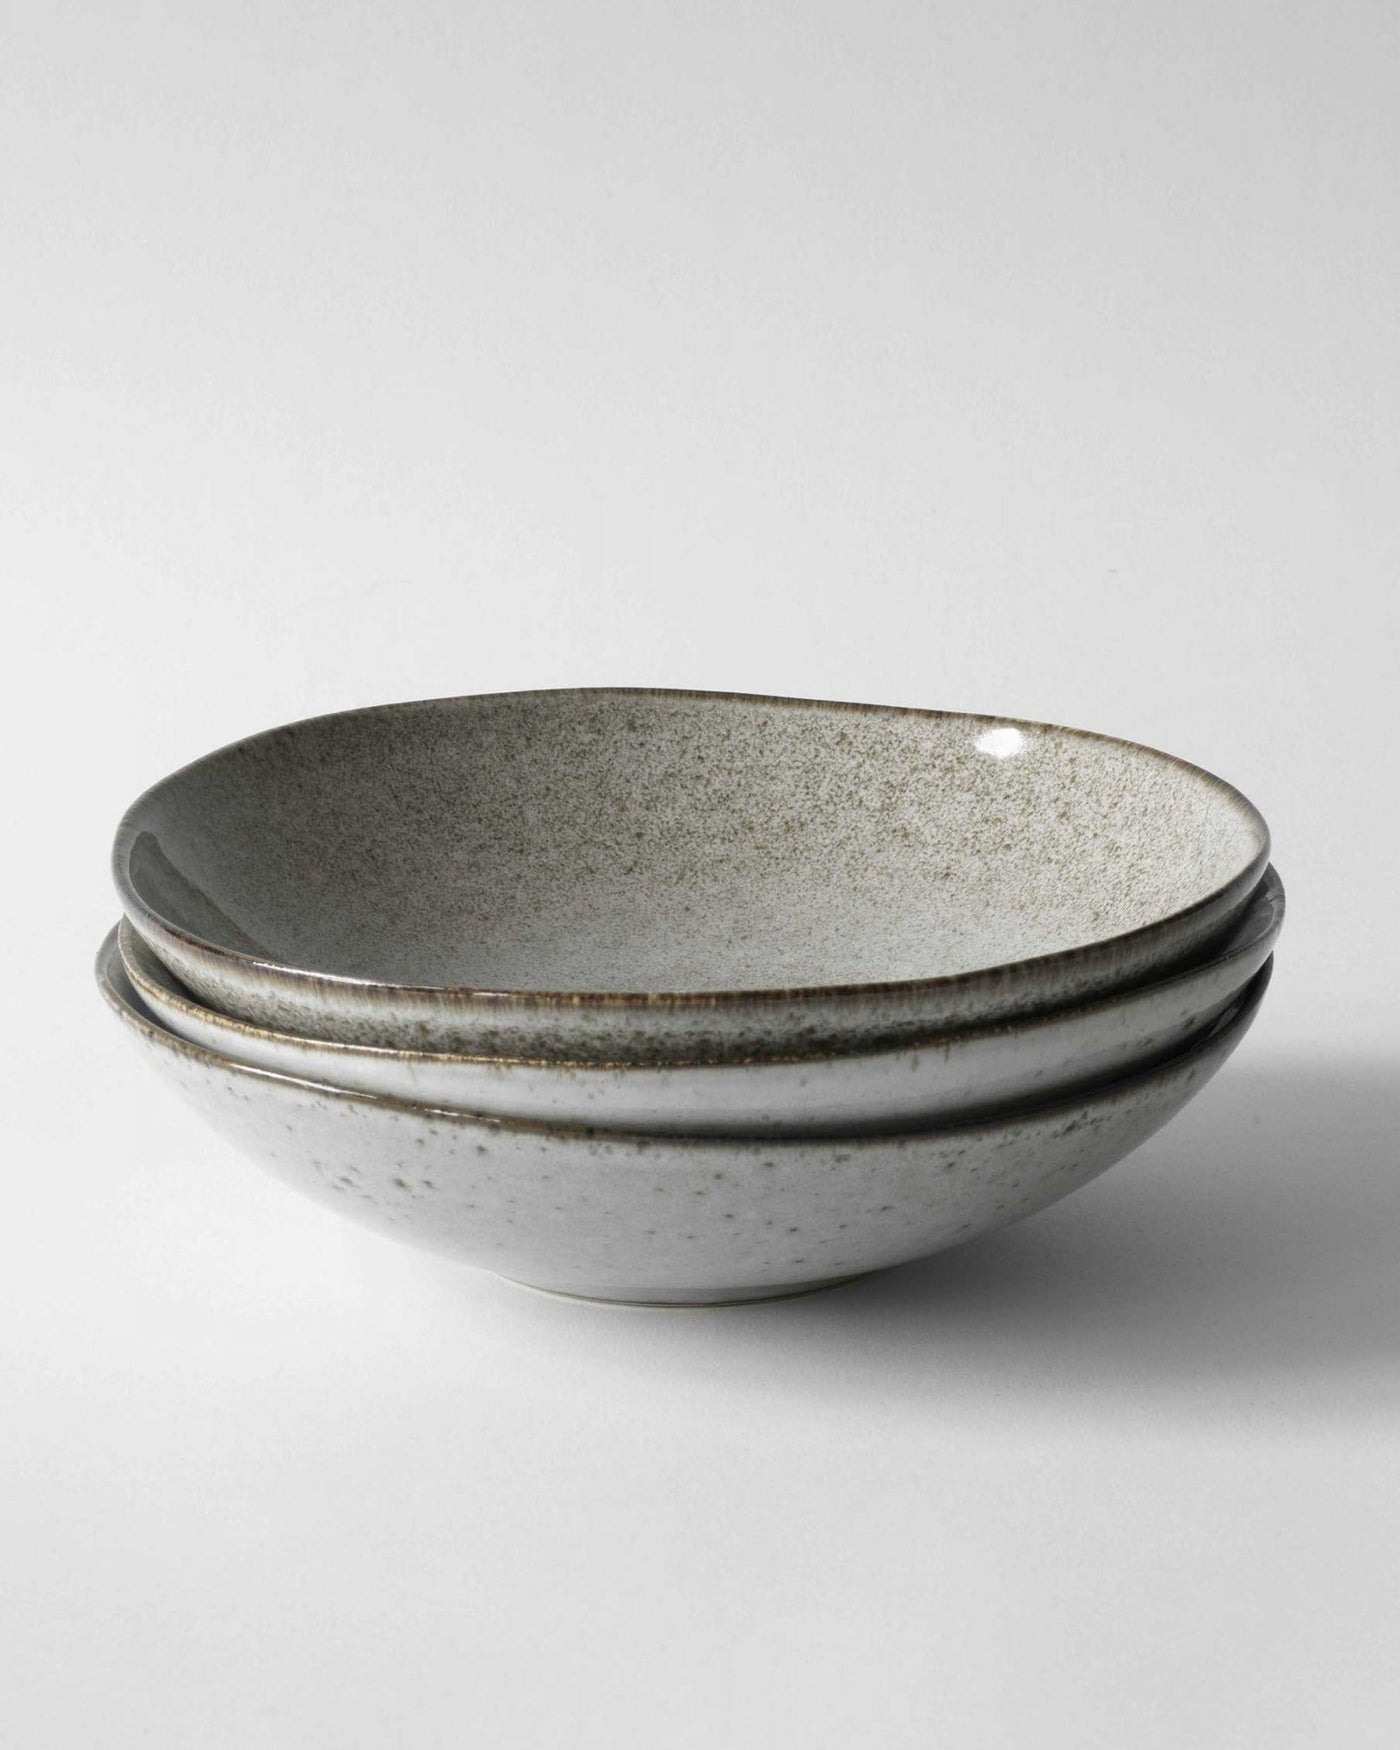 Taranto soup bowl, glazed stoneware